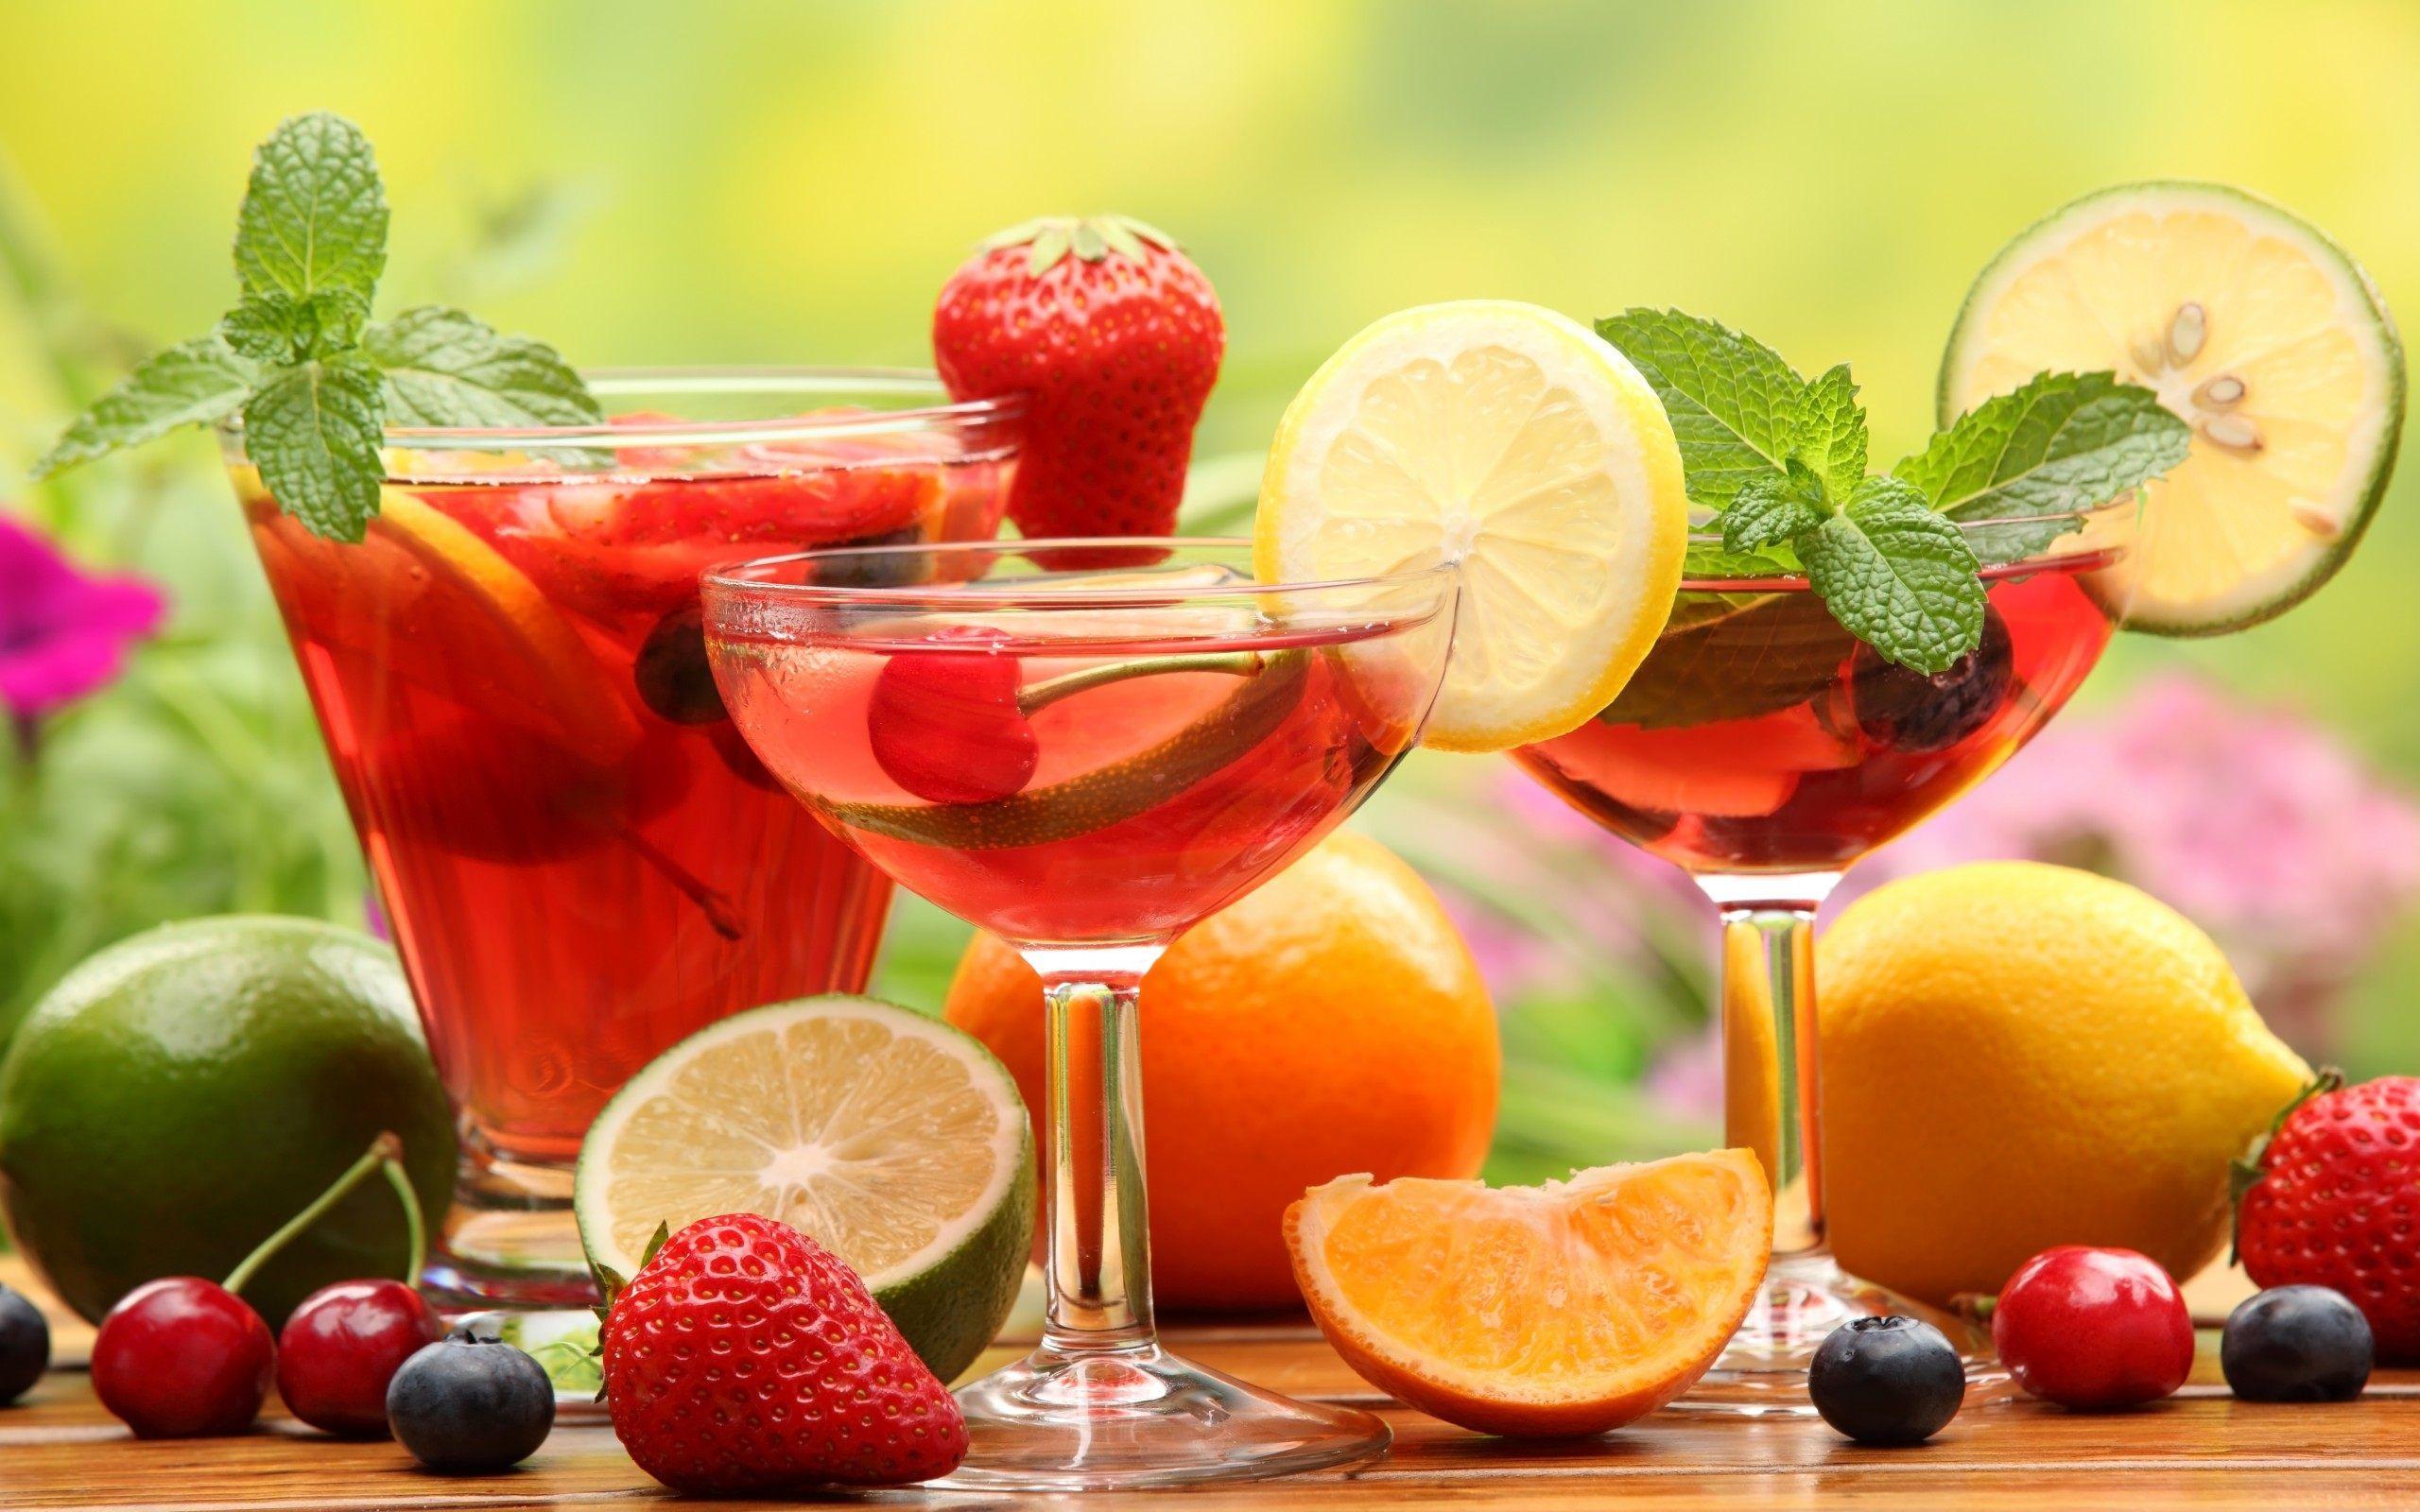 Natural Juice and Fruits Wallpaper HD For Desktop & Mobile